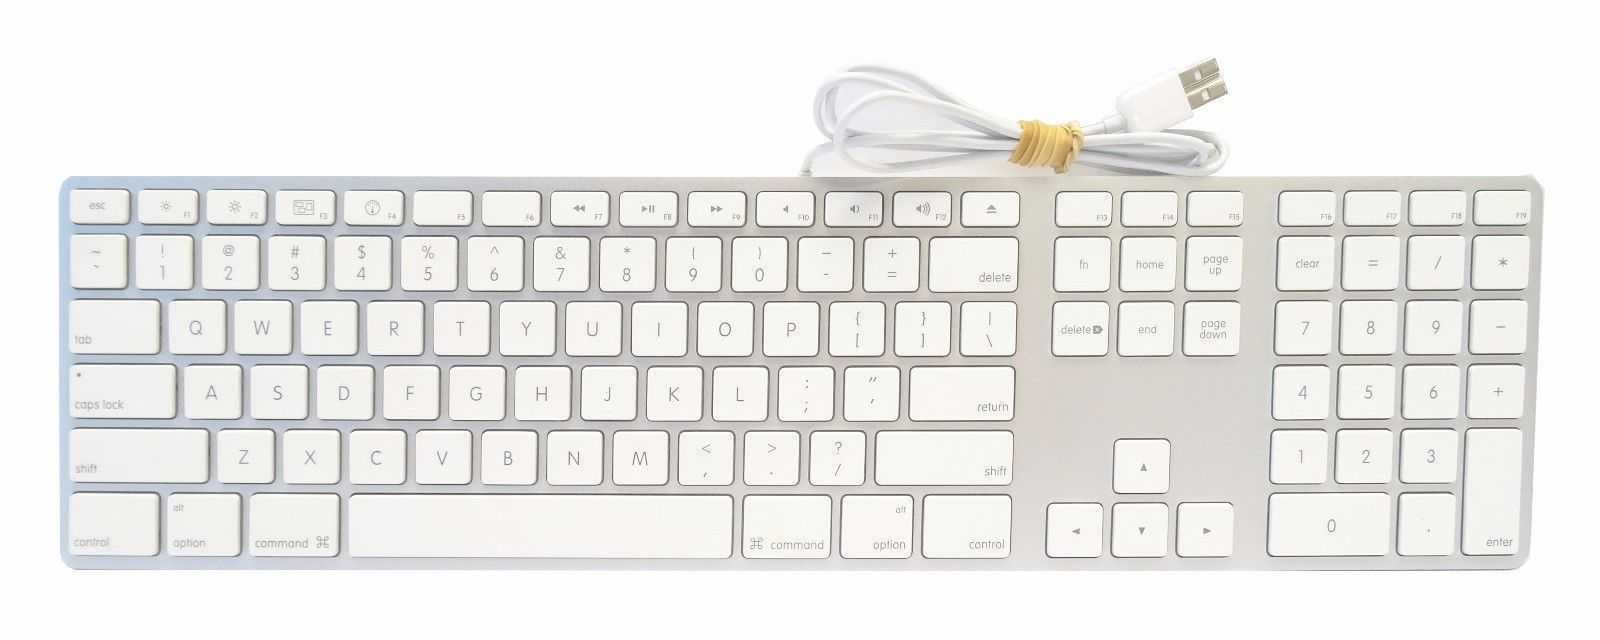 Клавиатура apple mb110 wired keyboard white usb [mb110rs(ru)/b] mb110rs/b (белый) (apple keyboard with numeric keypad) купить за 3990 руб в самаре, отзывы, видео обзоры и характеристики